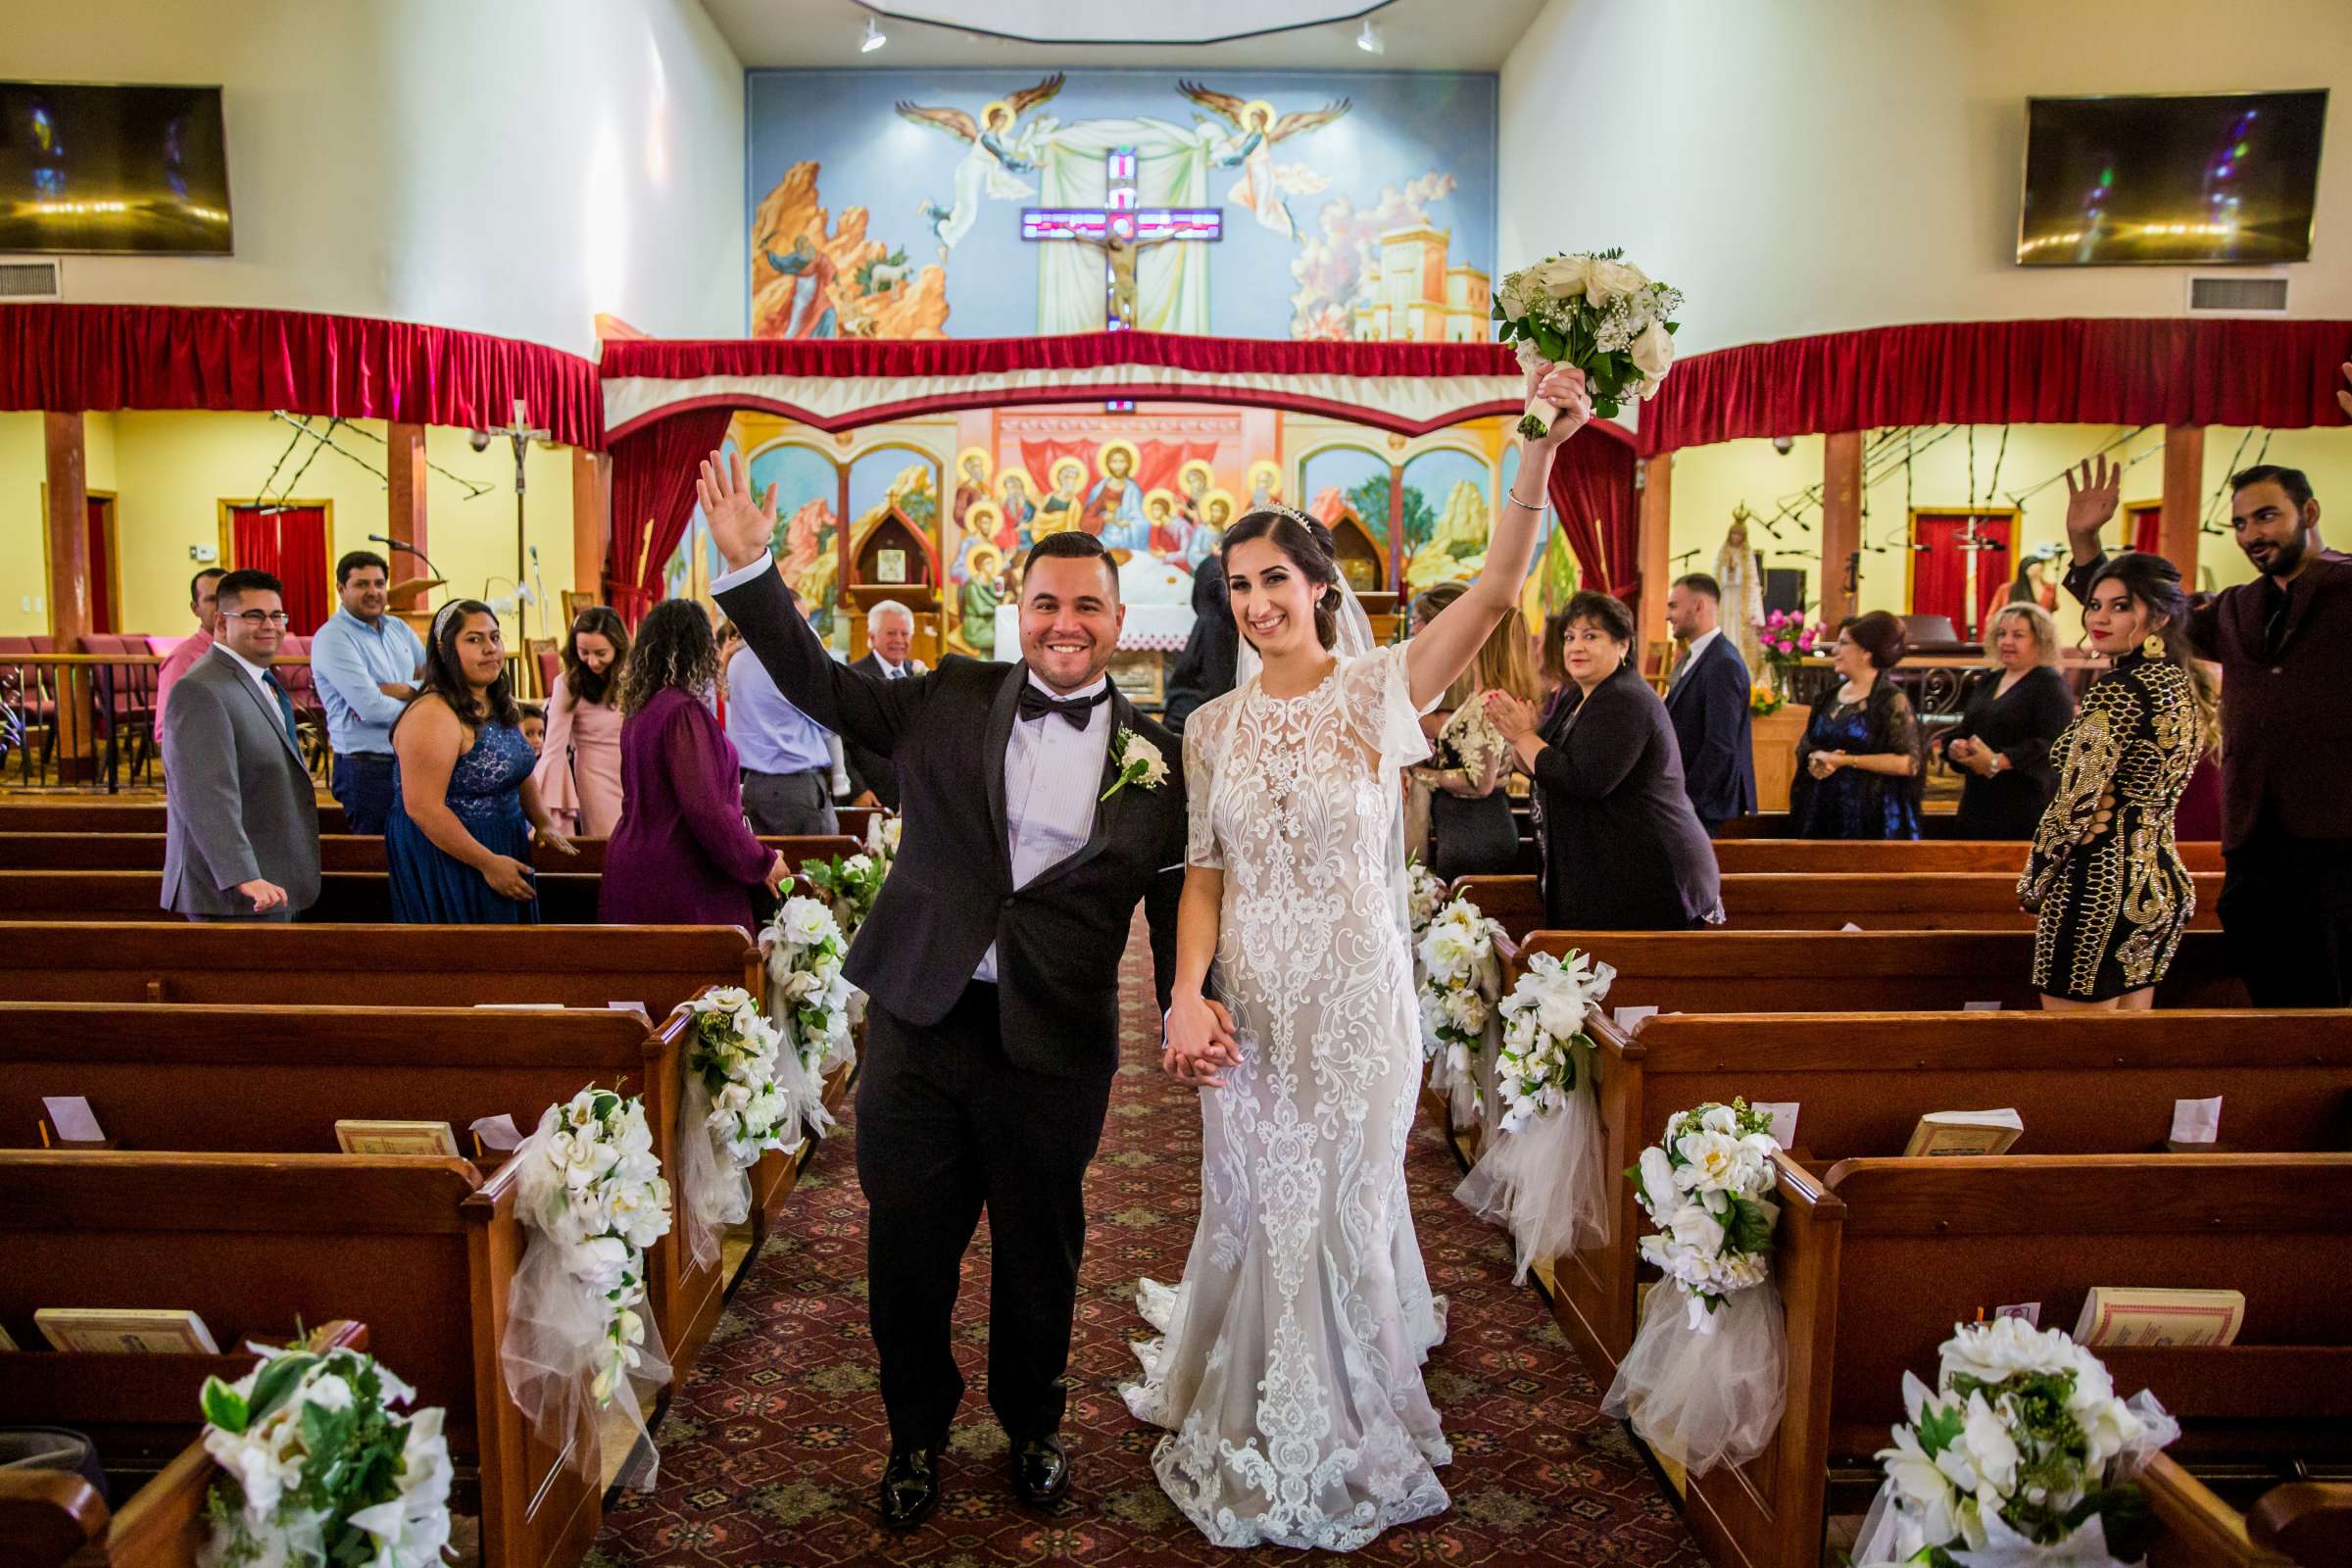 Hornblower cruise line Wedding, Leena and Daniel Wedding Photo #59 by True Photography